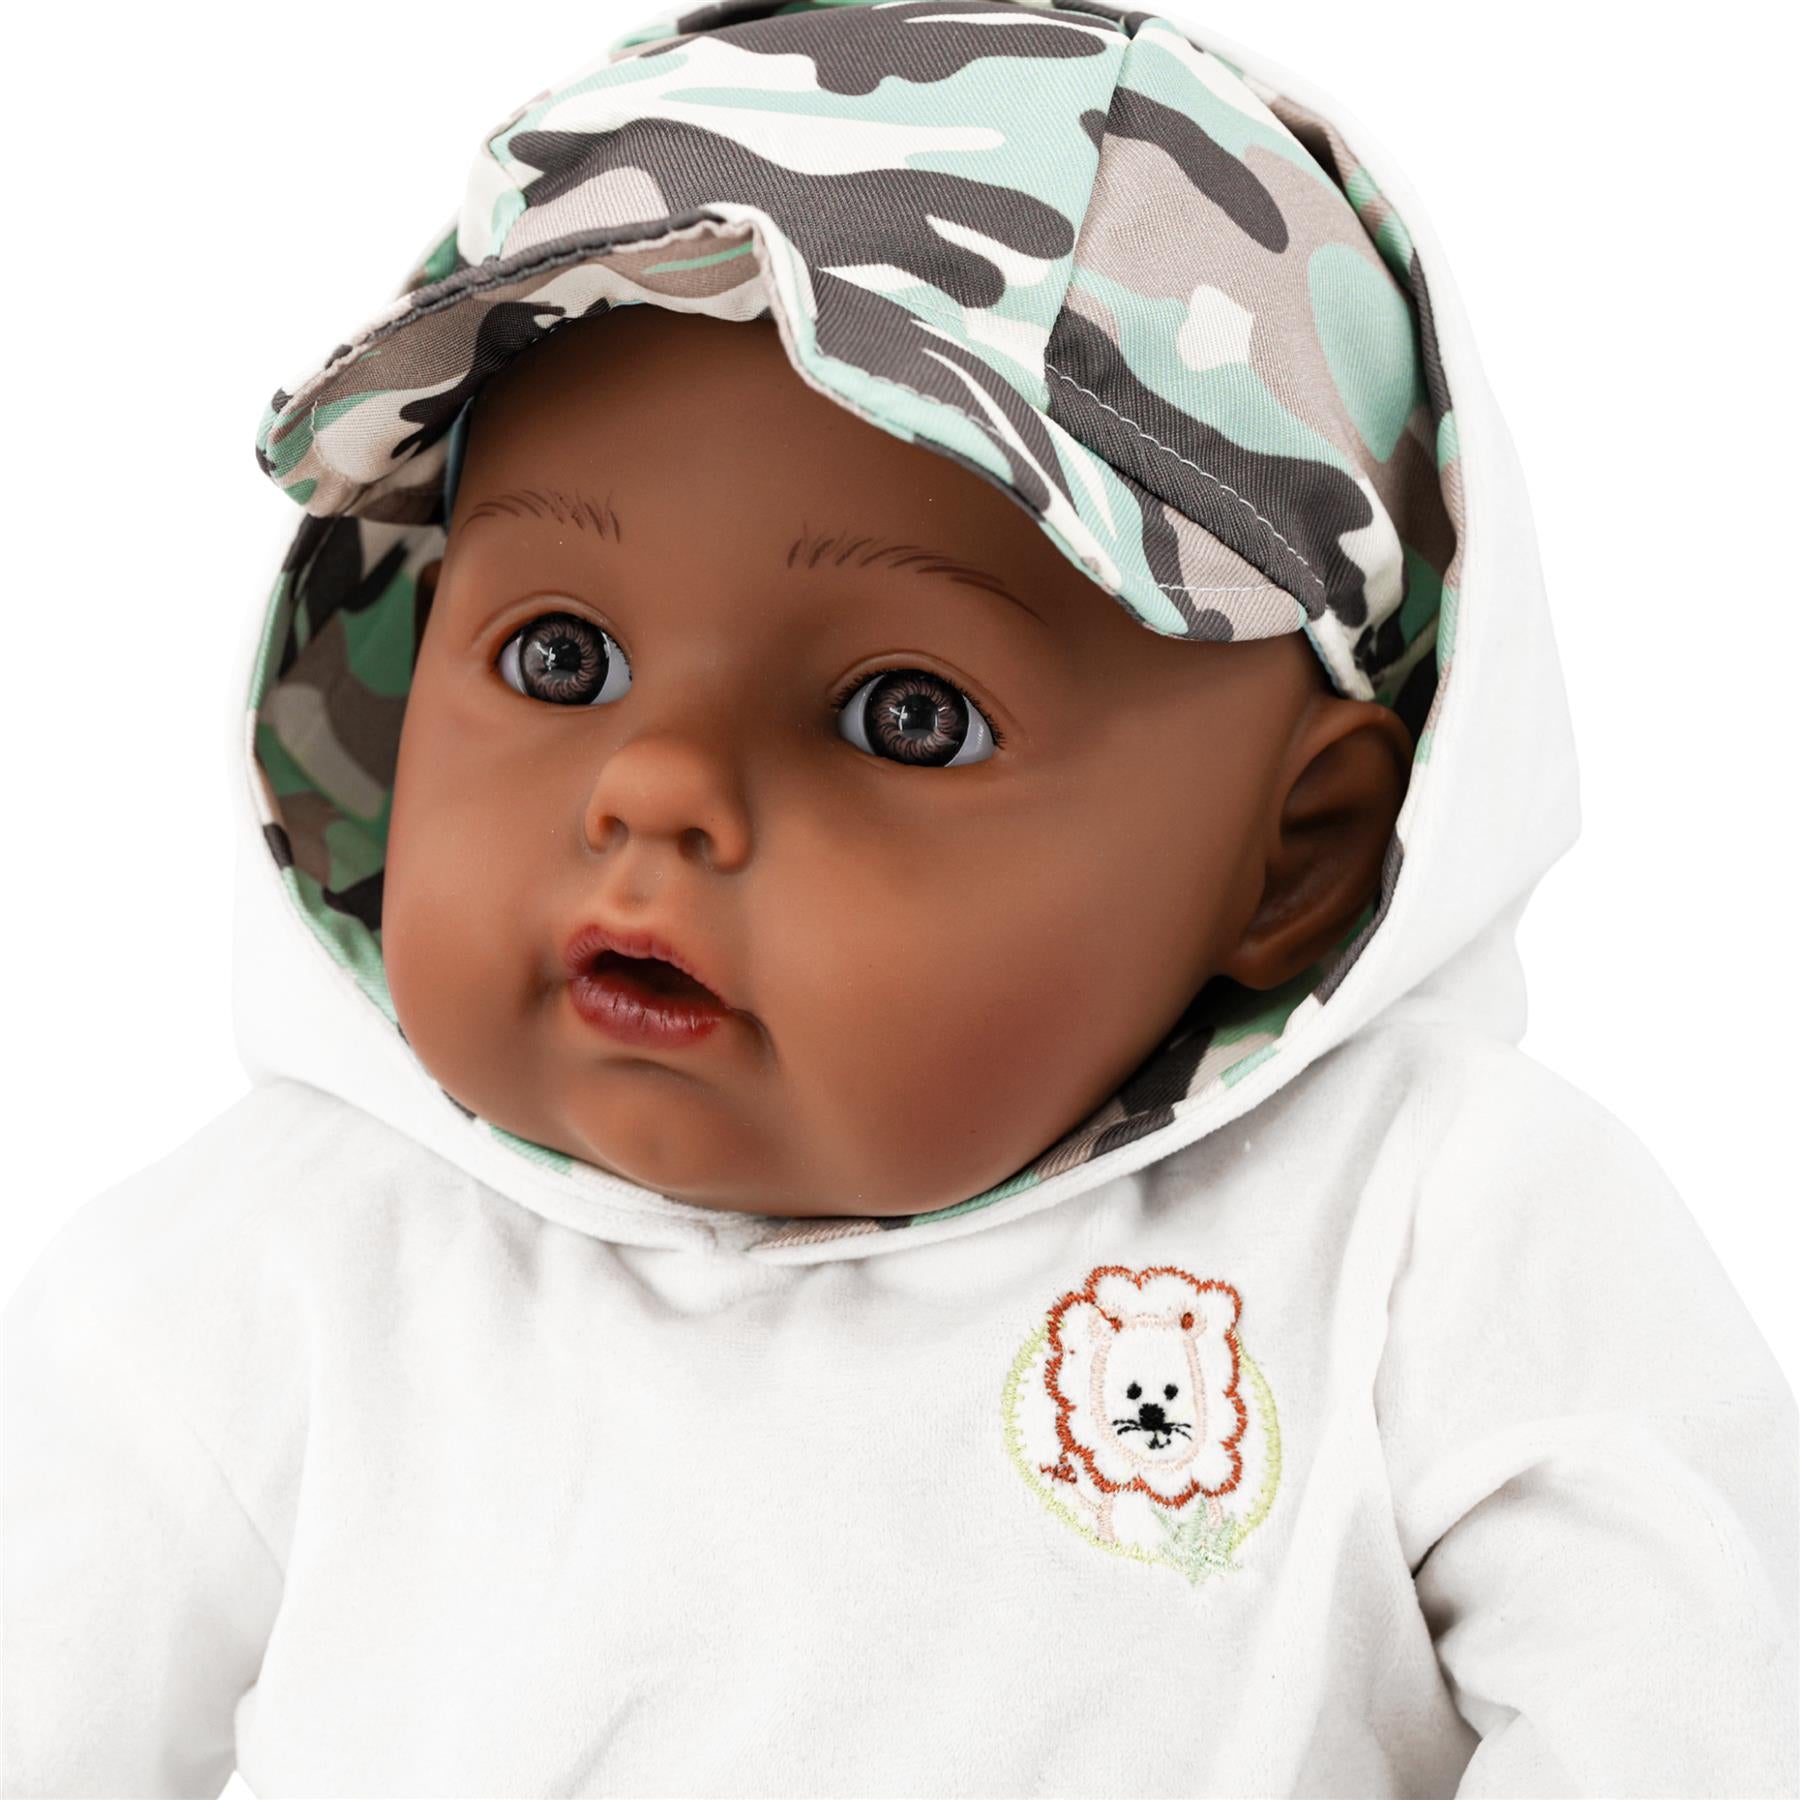 BiBi Black Baby Doll "Grean Pea" (Camo) (50 cm / 20") by BiBi Doll - UKBuyZone